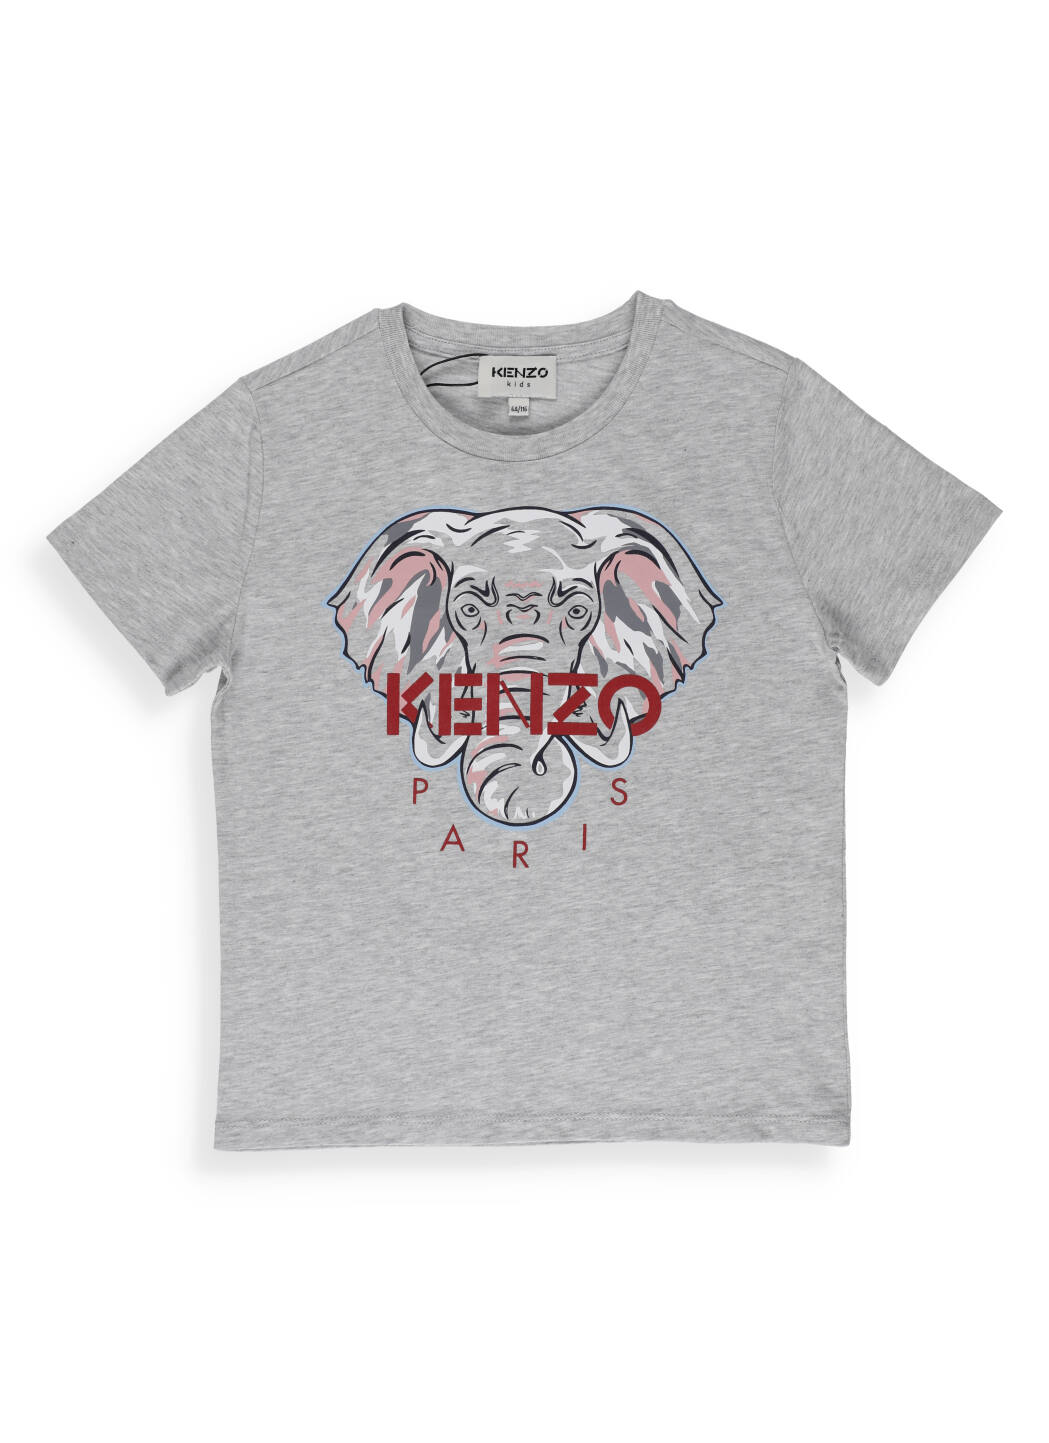 Kenzo Kids' Cotton T-shirt In Grigio Antico